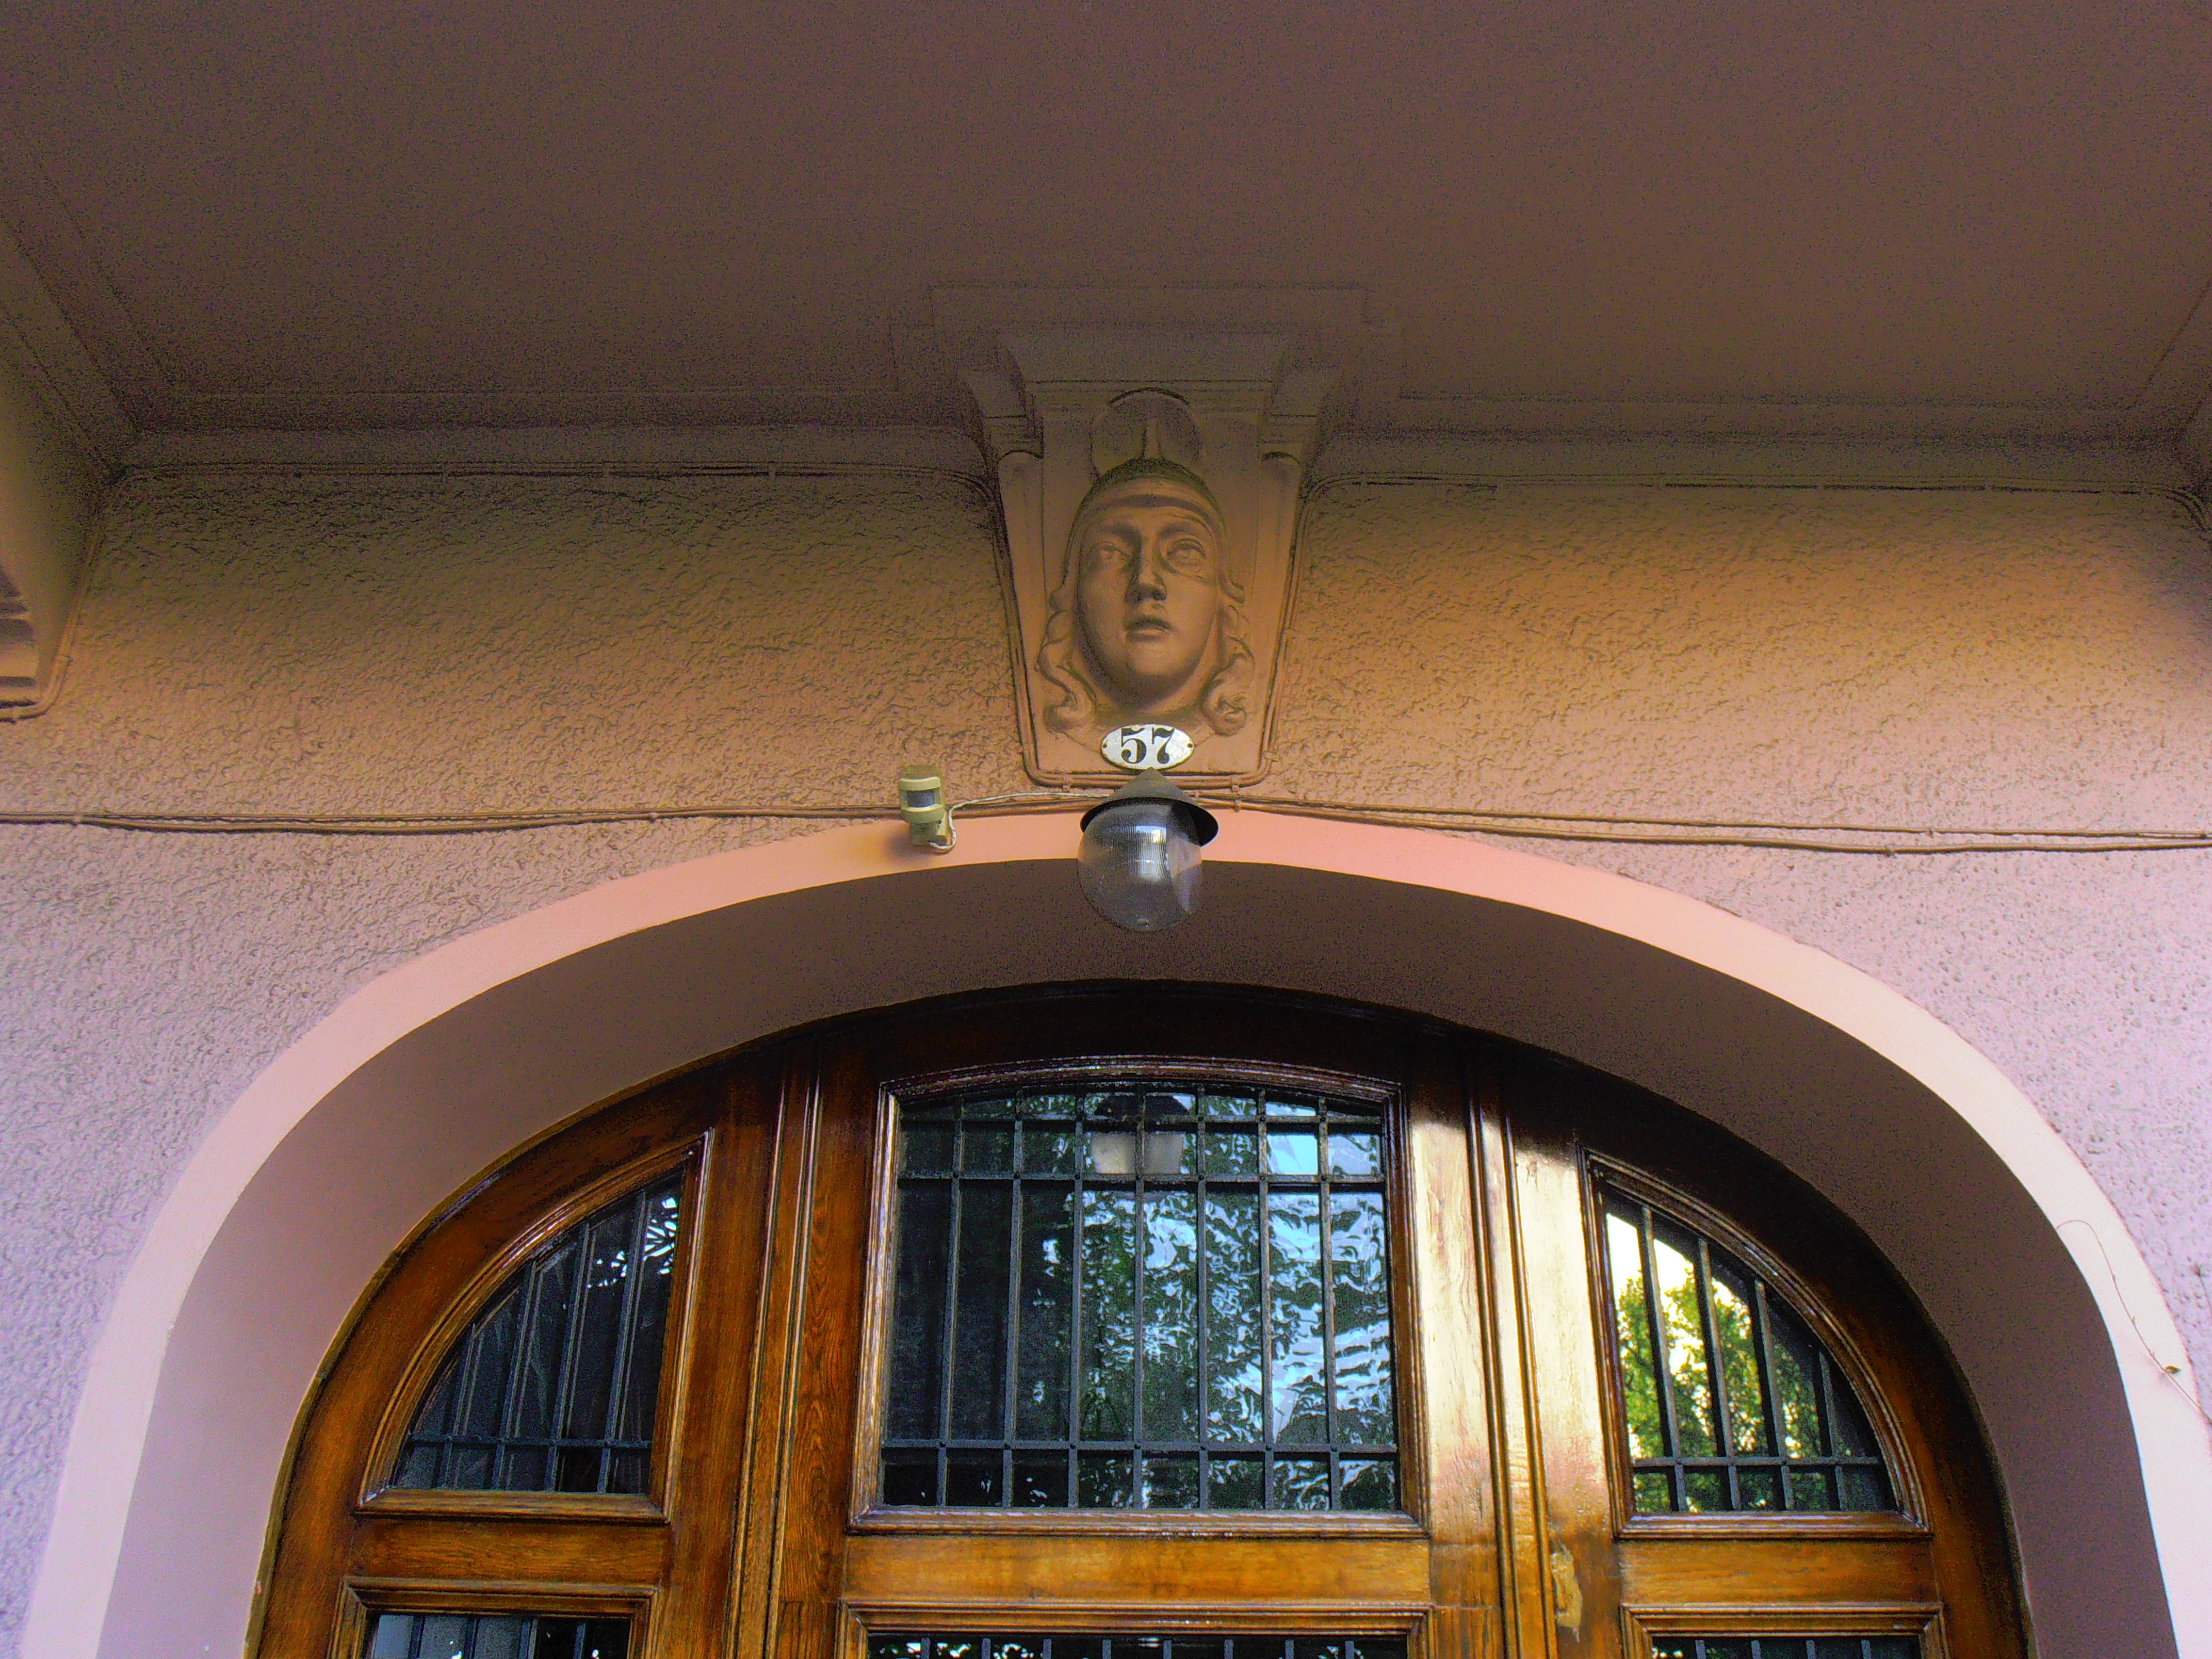 Detail of the entrance door